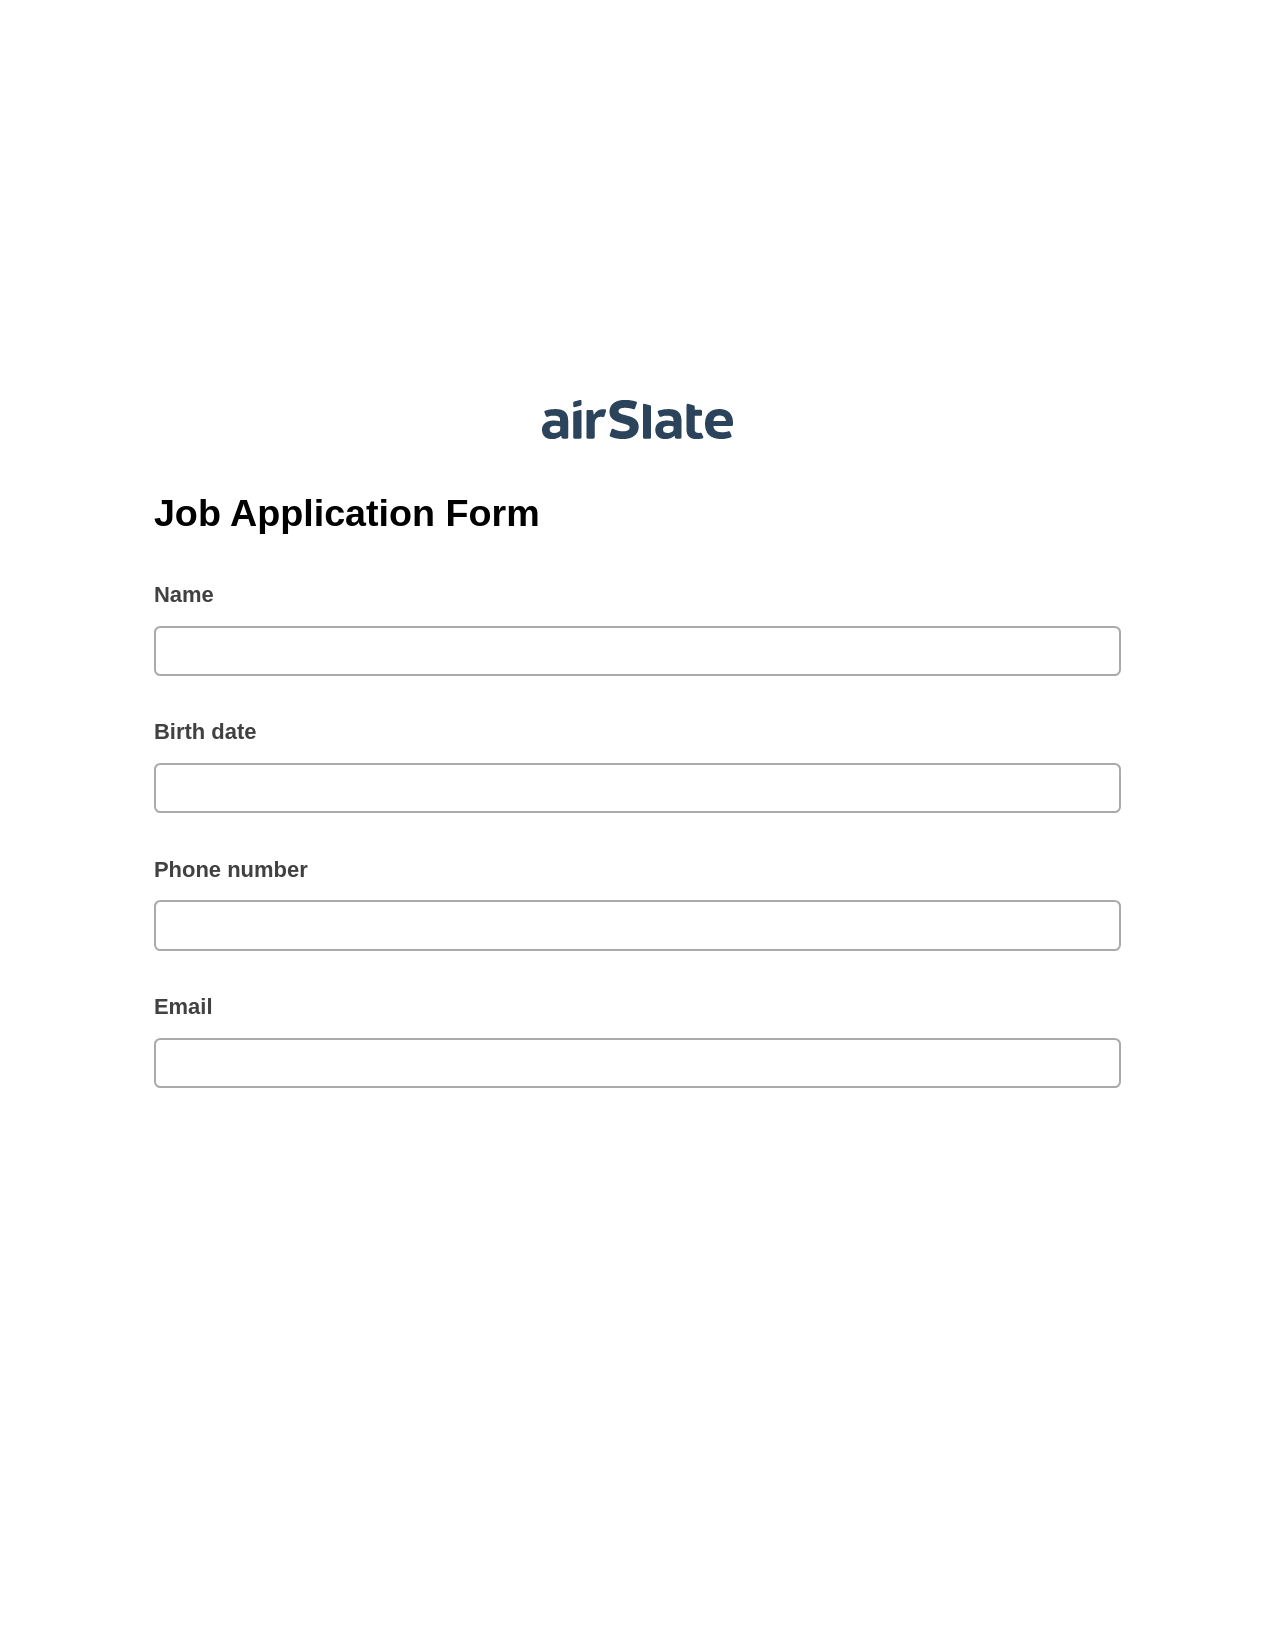 Job Application Form Pre-fill from Excel Spreadsheet Dropdown Options Bot, Create slate addon, Webhook Postfinish Bot